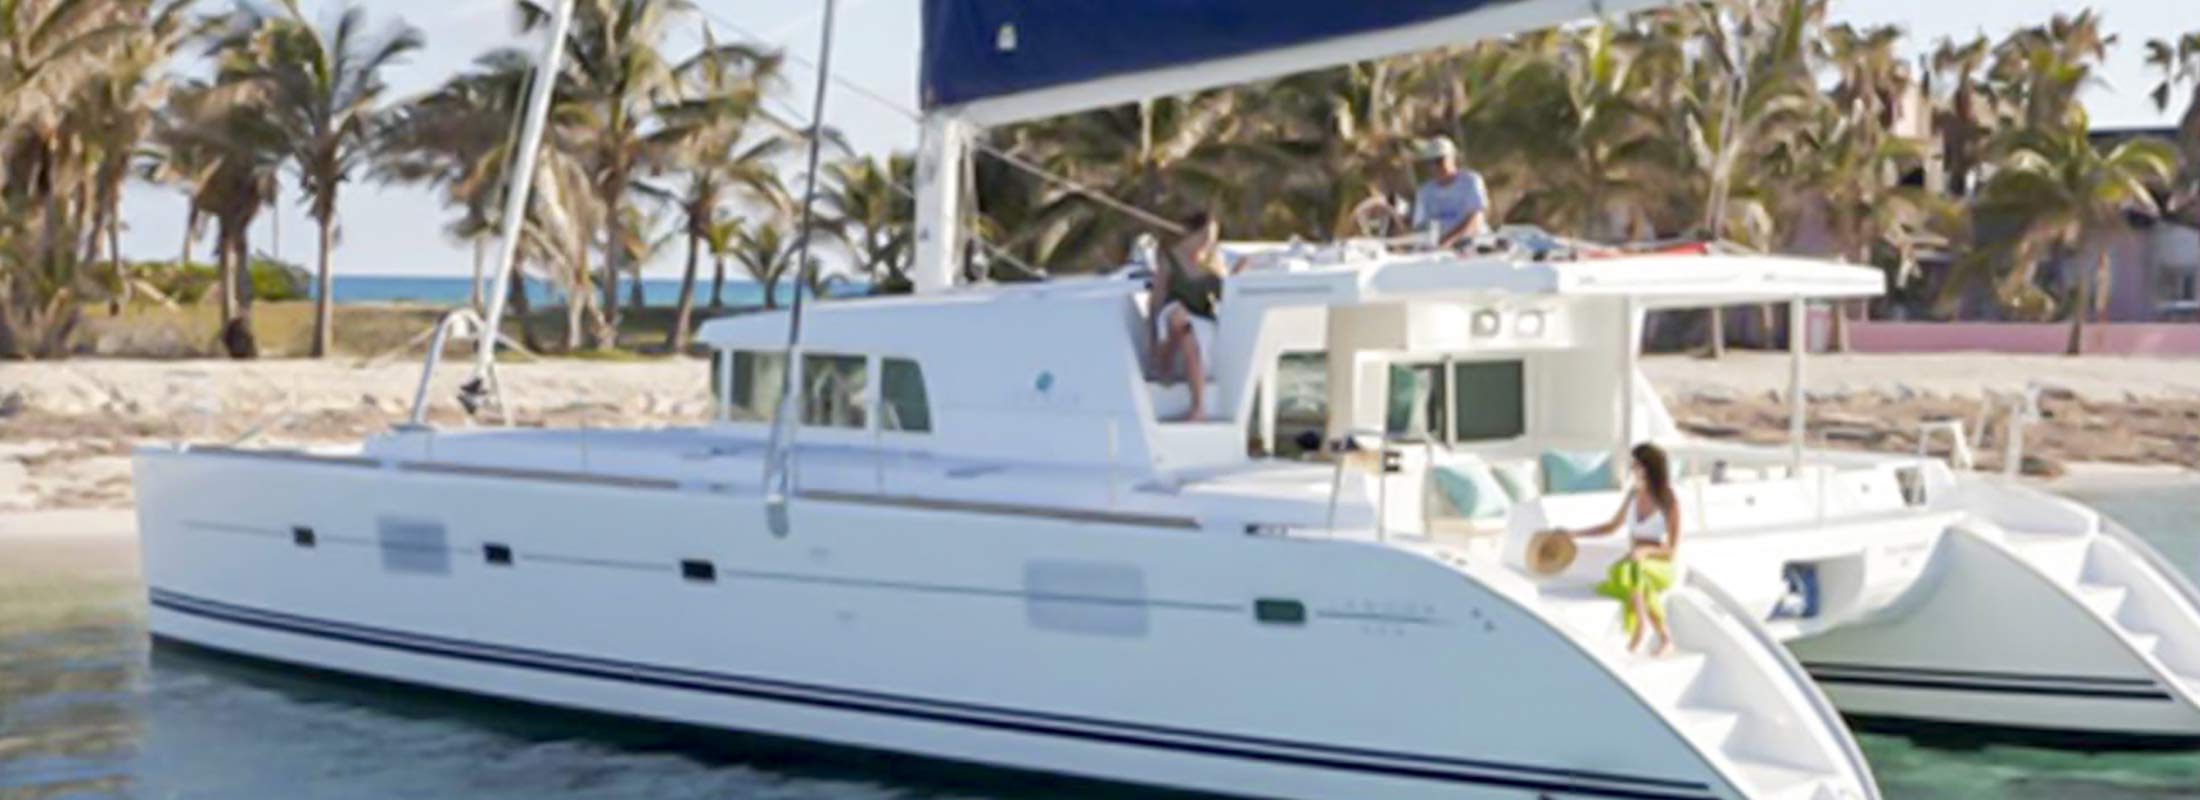 Sasha Sailing Yacht for Charter Carribean Sea The Bahamas slider 2